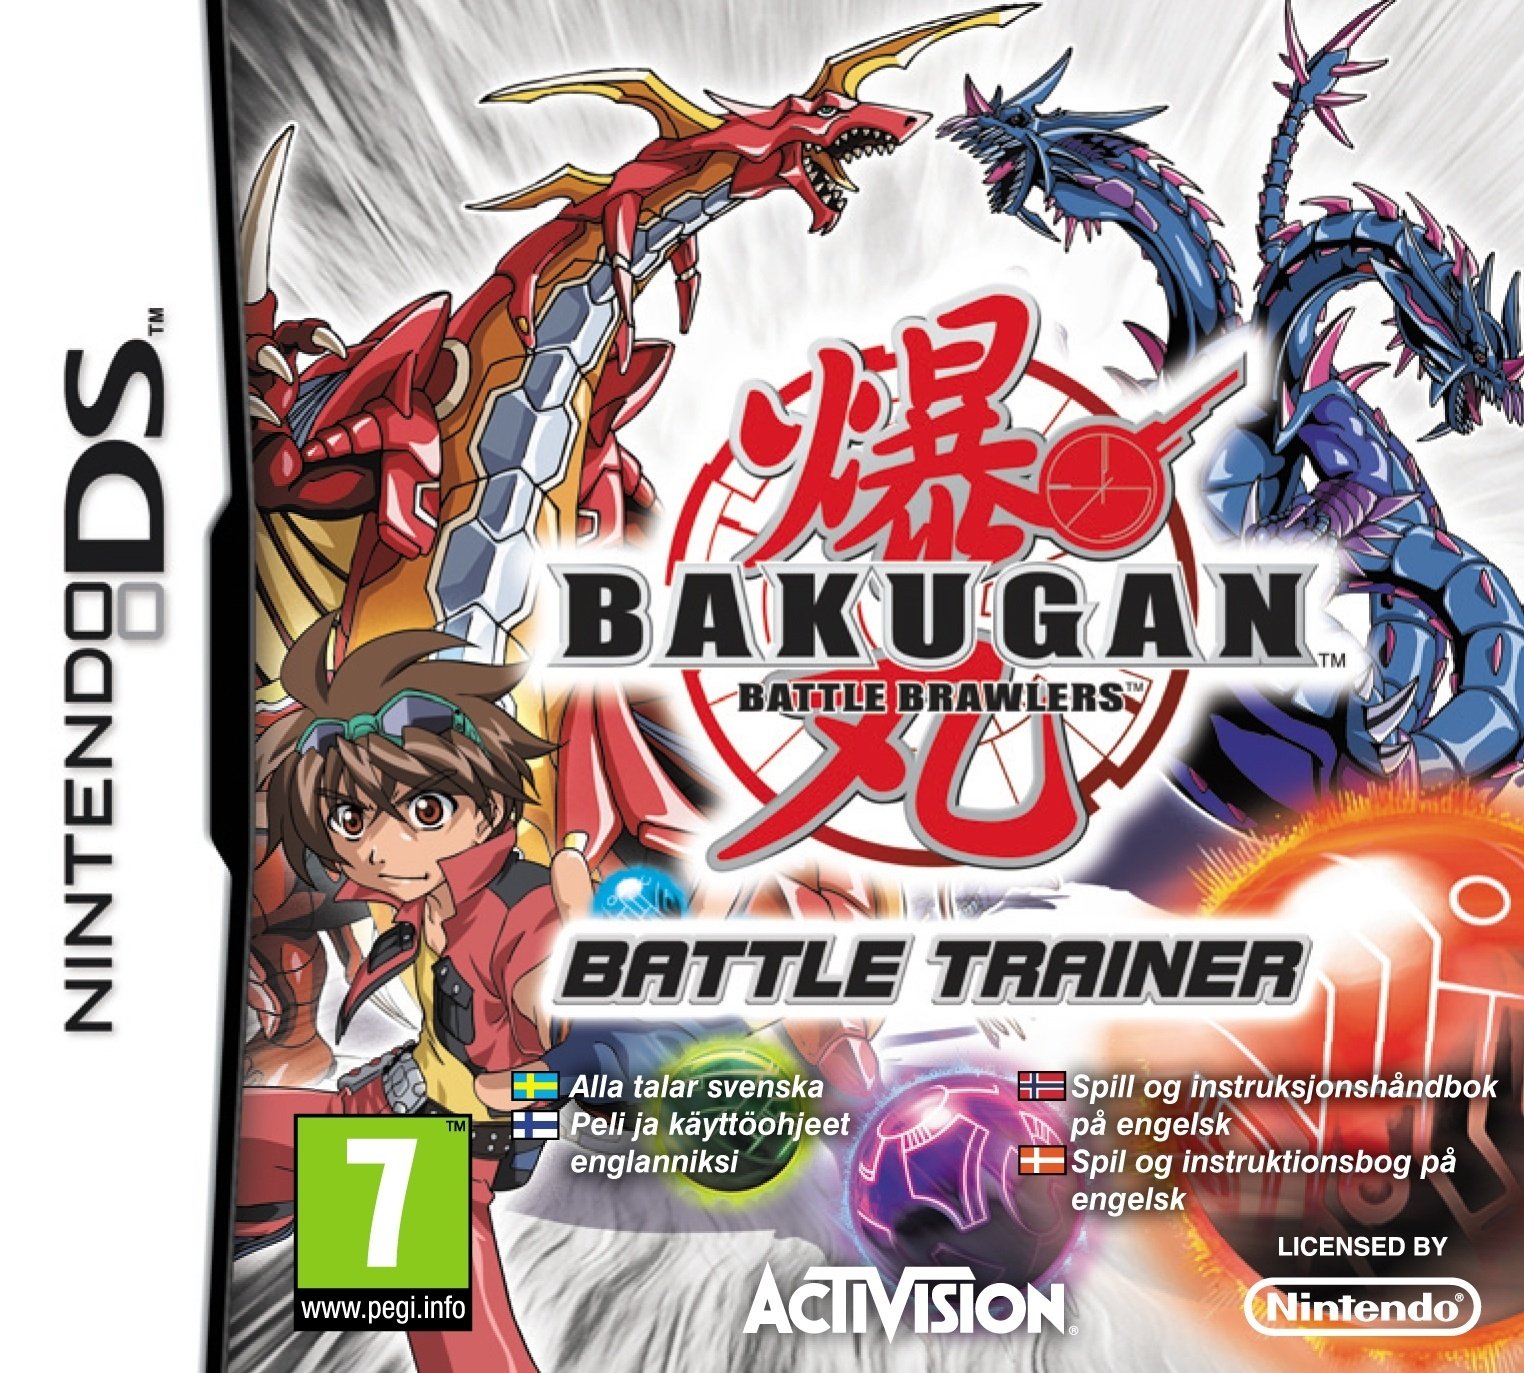 The coverart image of Bakugan: Battle Brawlers - Battle Trainer